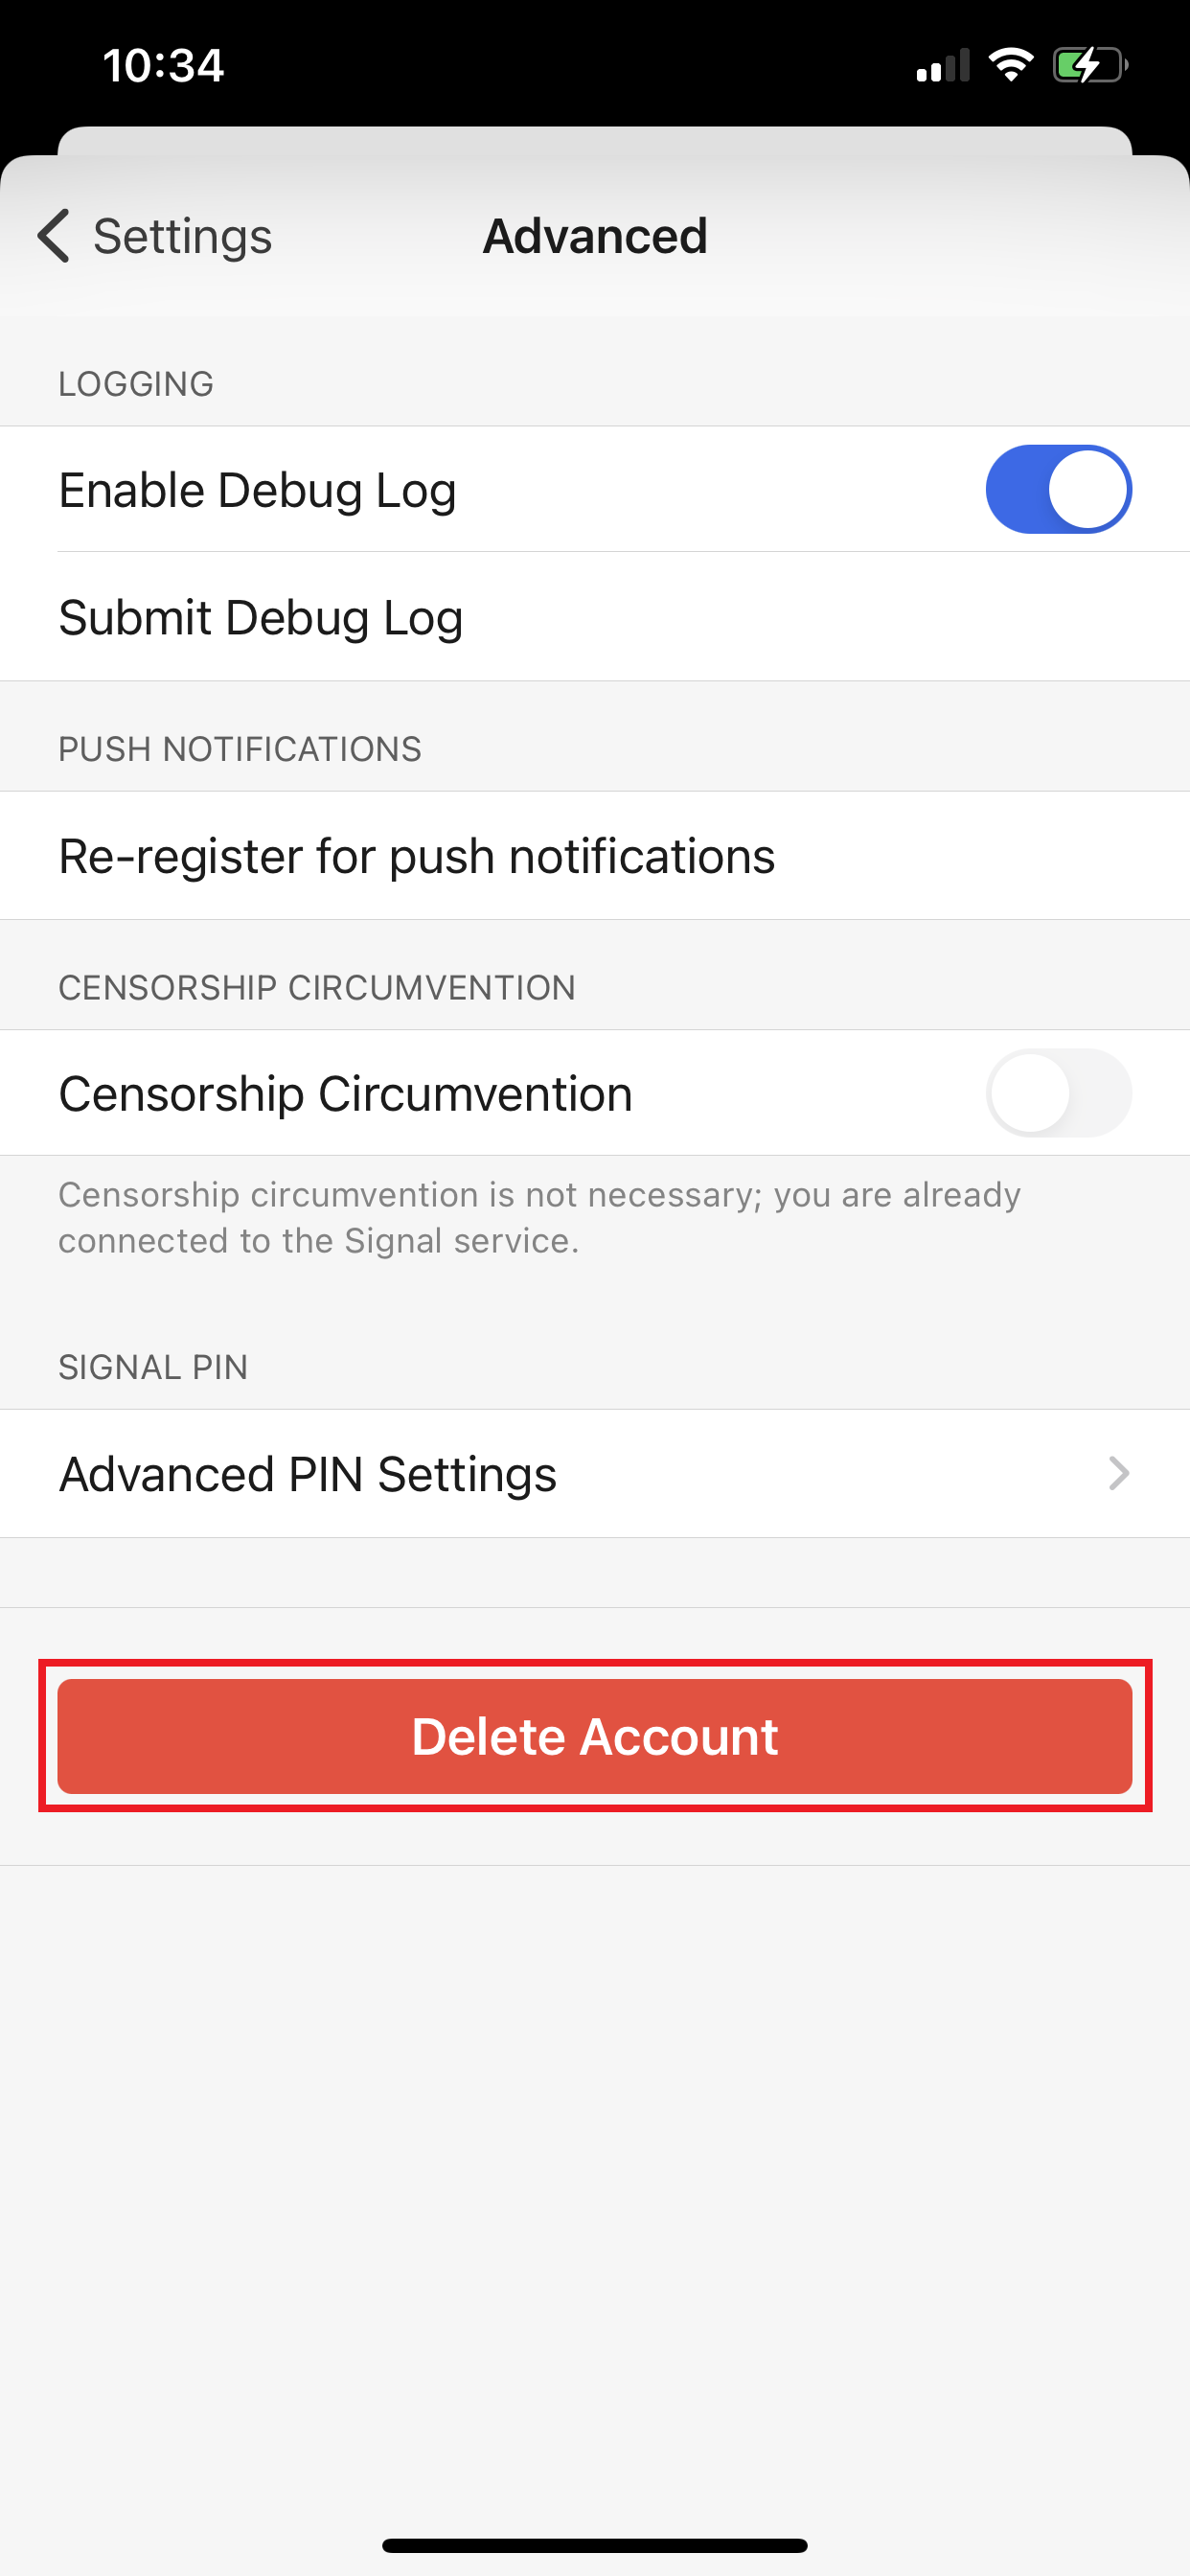 How to Delete Signal Account on iPhone or iPad — Max Dalton Tutorials